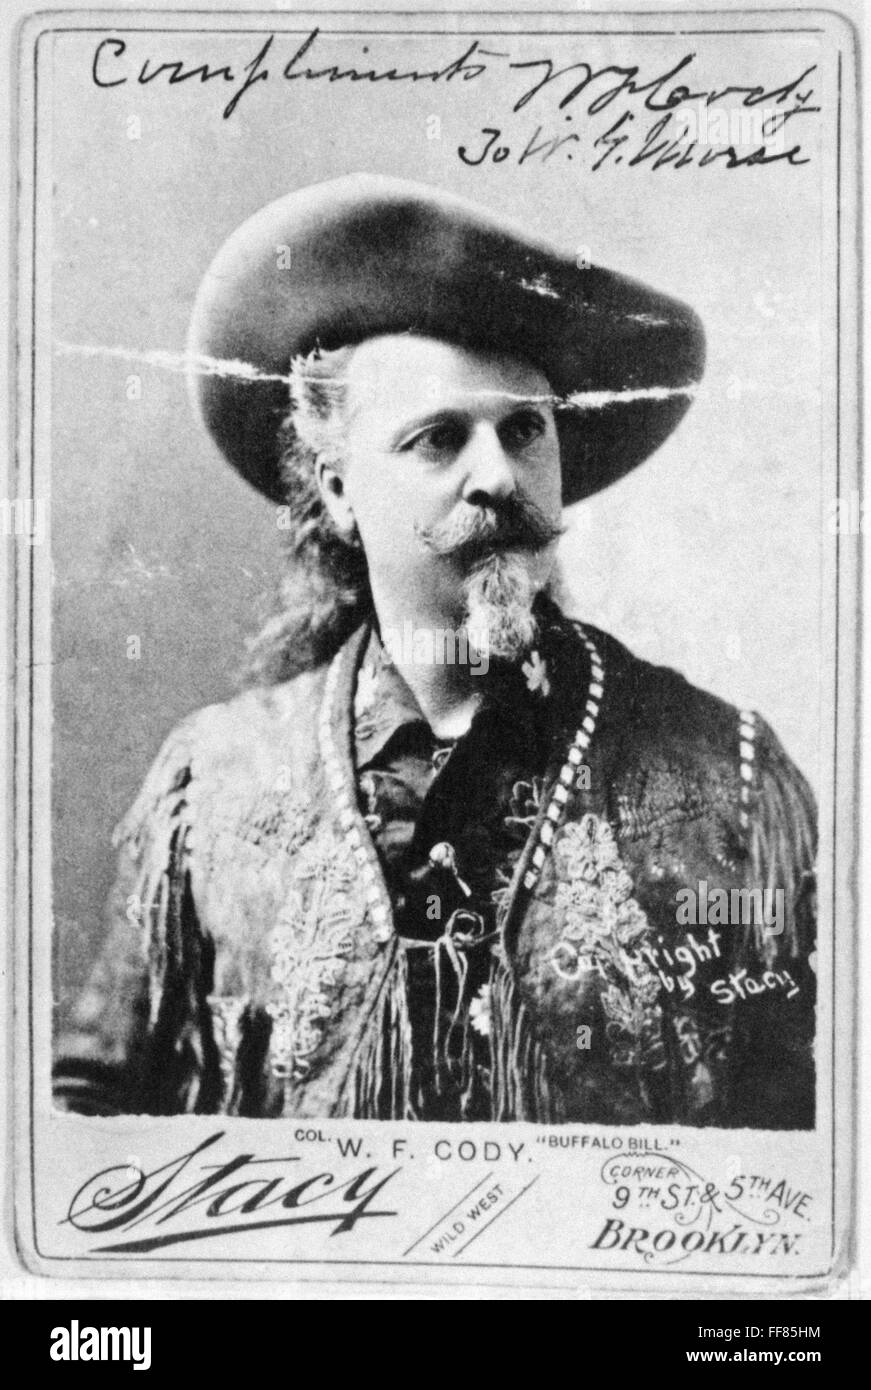 Buffalo Bill Cody 1911 Portrait Silver Halide Photo William F